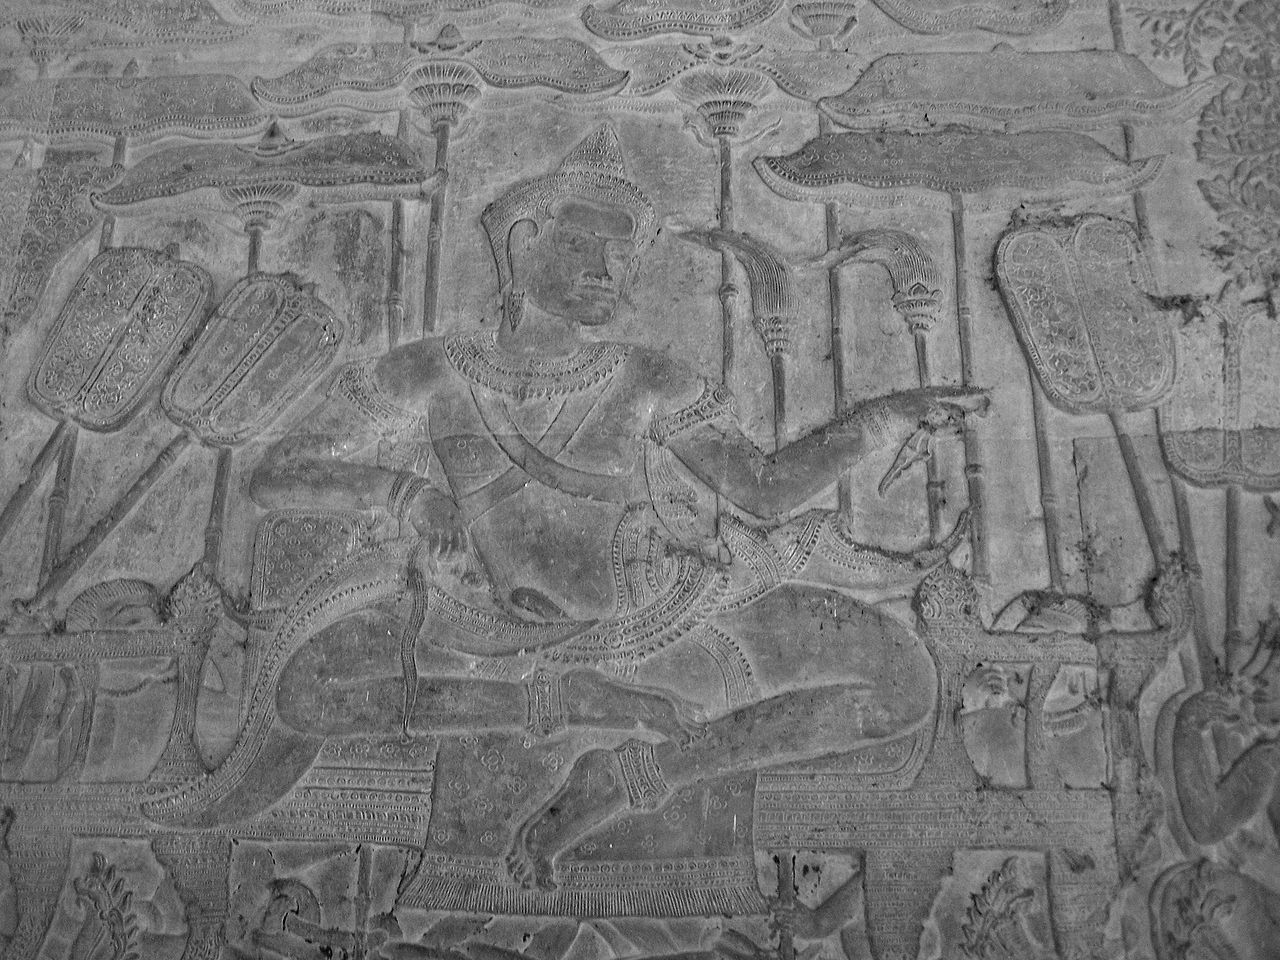 King Suryavarman II, the builder of Angkor Wat